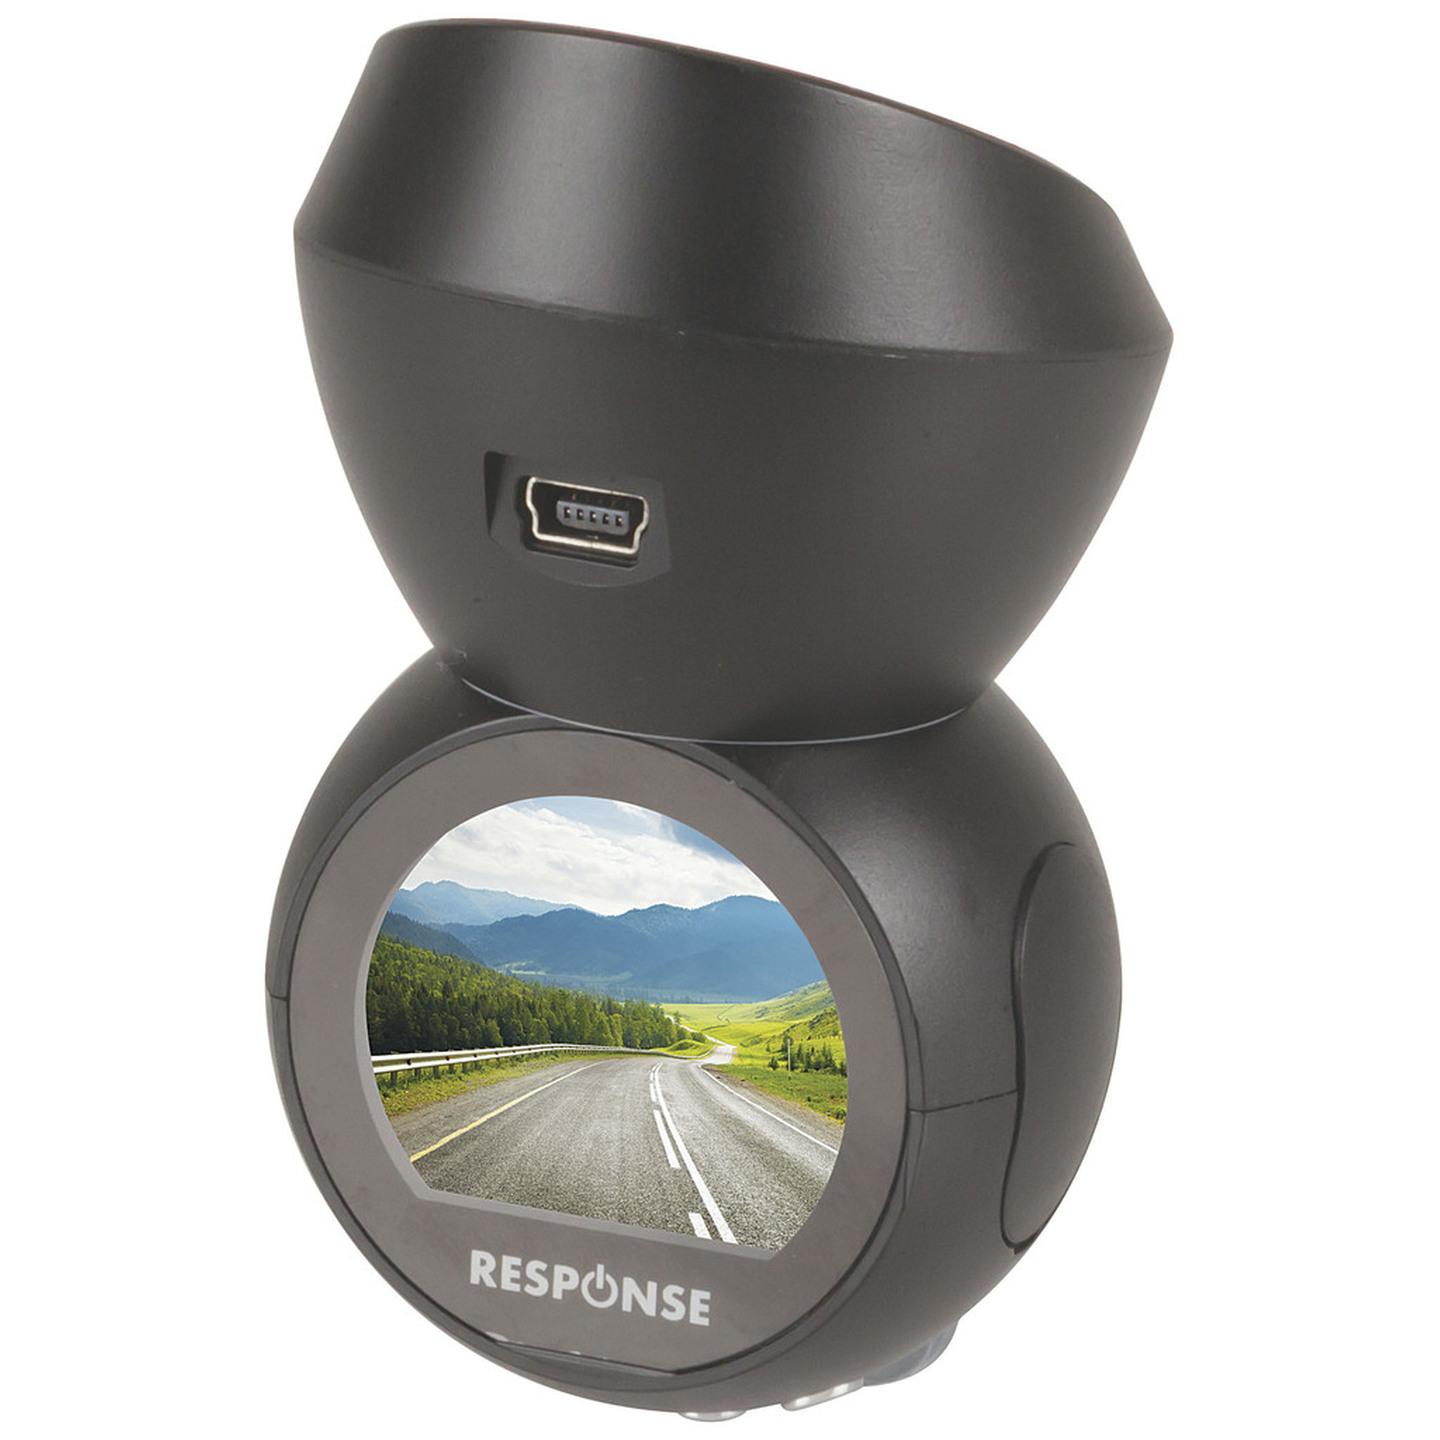 1080p Wi-Fi Dash Camera with GPS